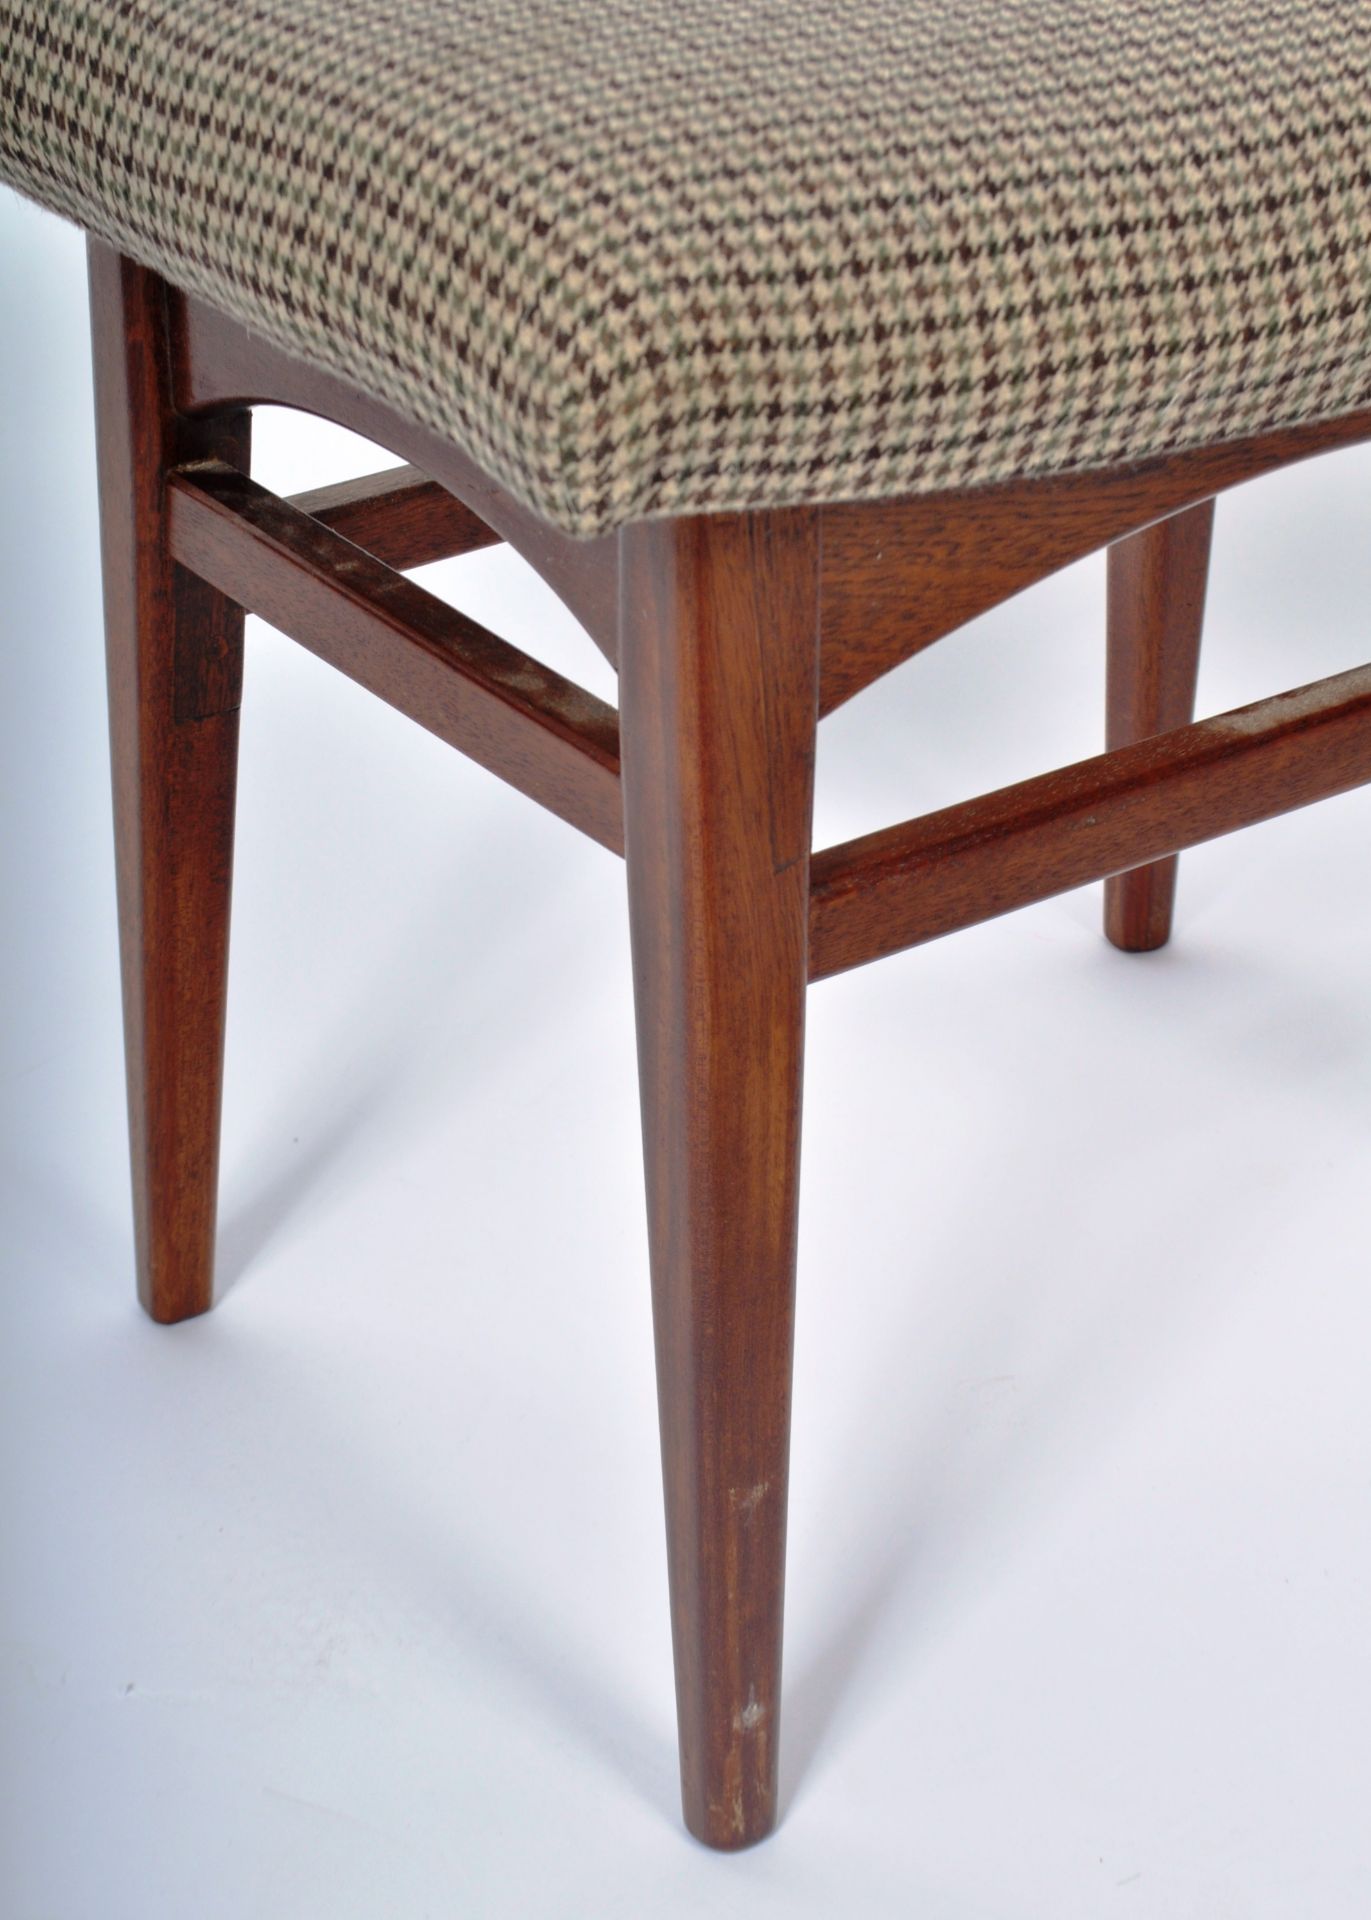 AUSTINE SUITE - MID CENTURY DRESSING TABLE STOOL - Image 4 of 5